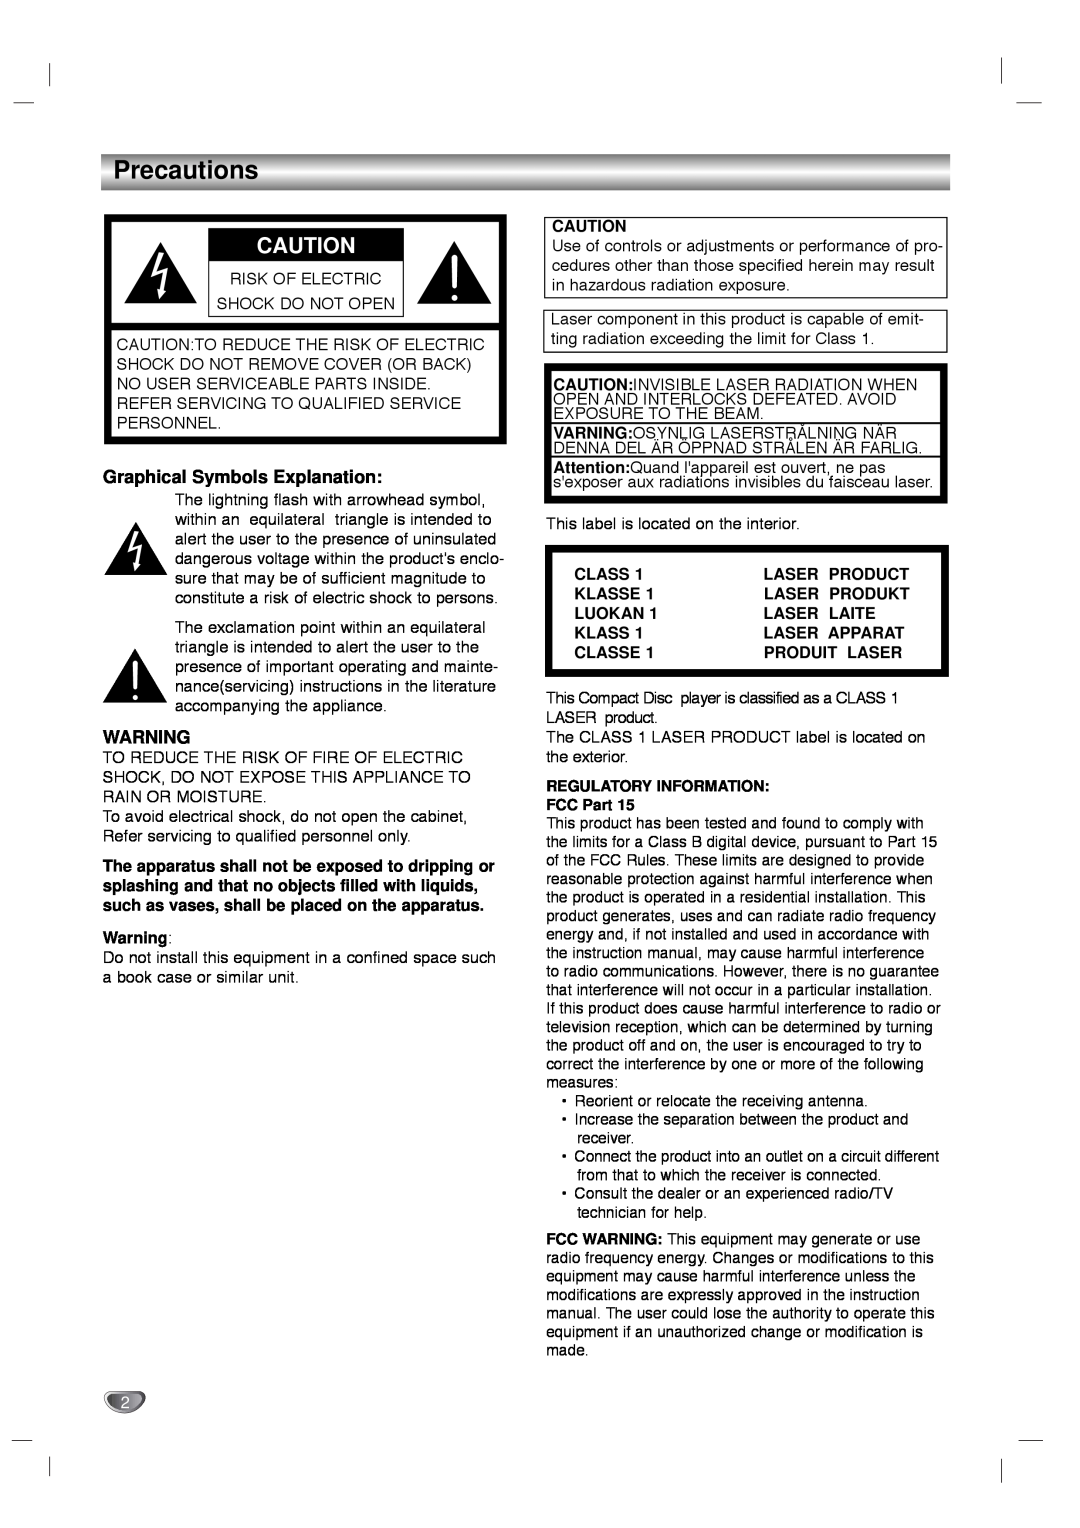 Zenith LMG340 warranty Precautions, Graphical Symbols Explanation 